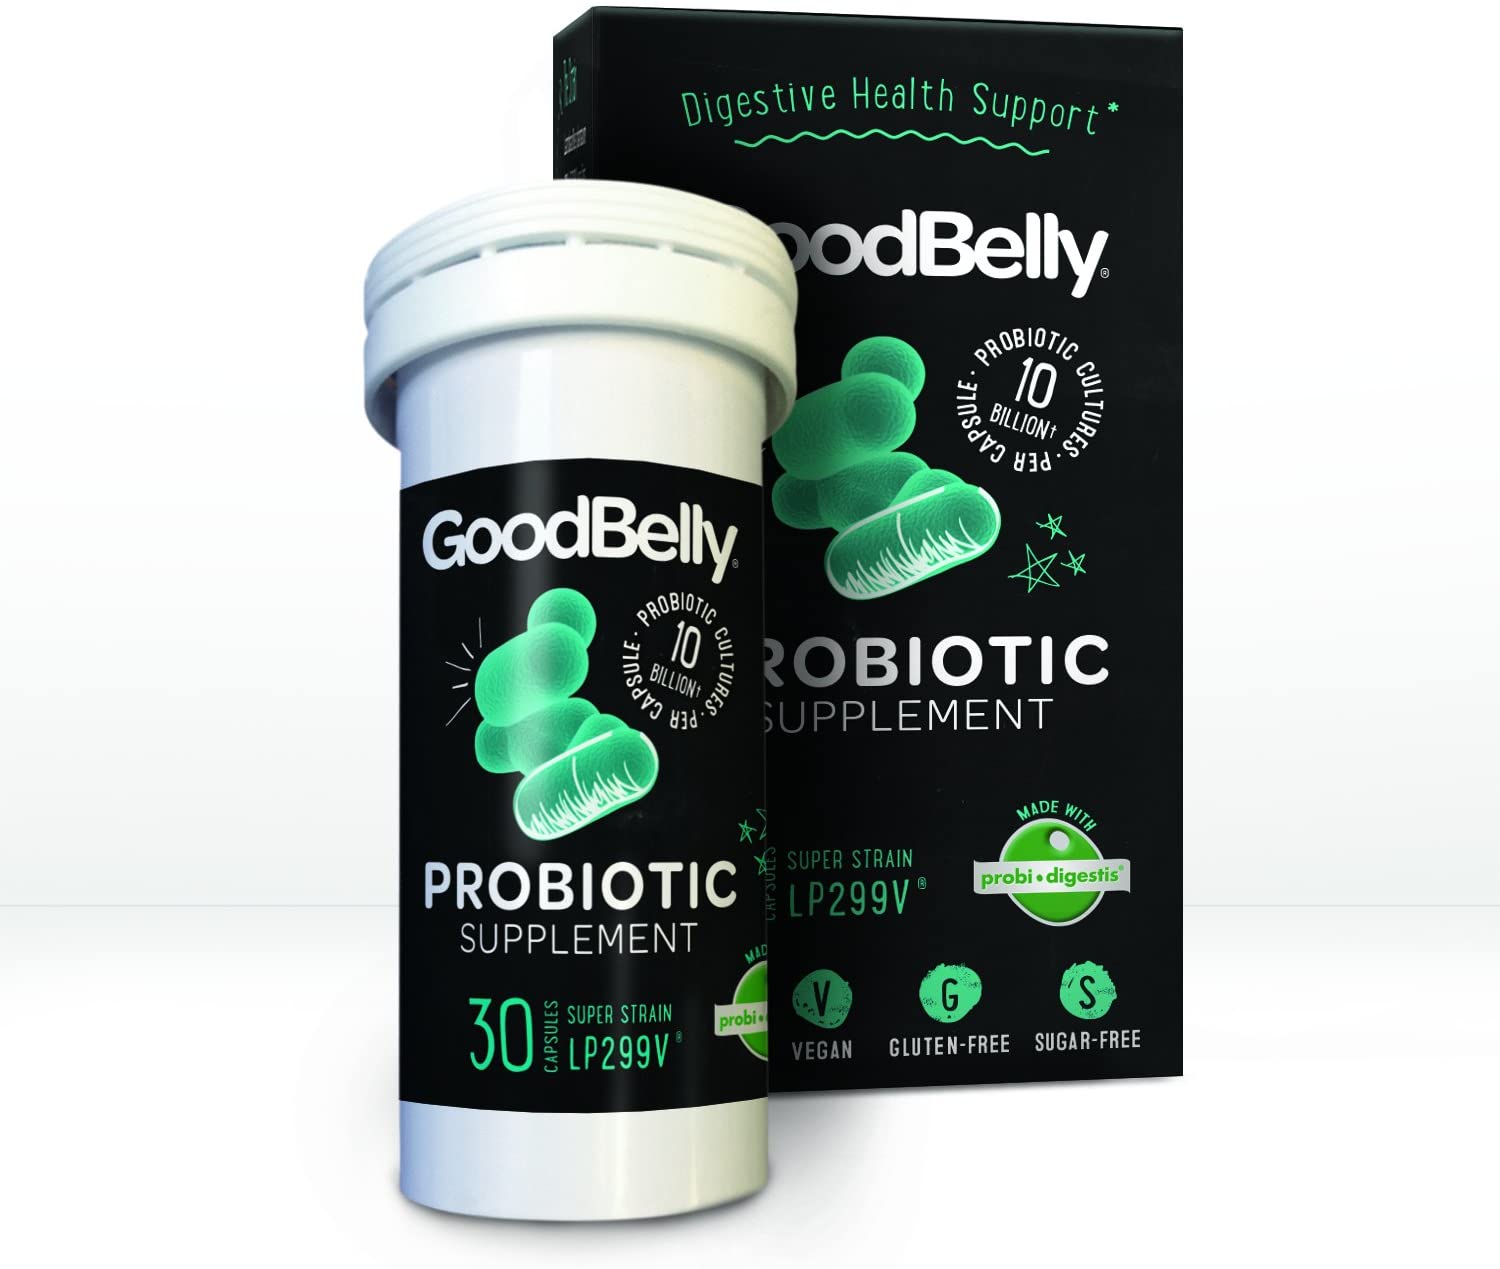                                Good belly Probiotics Review